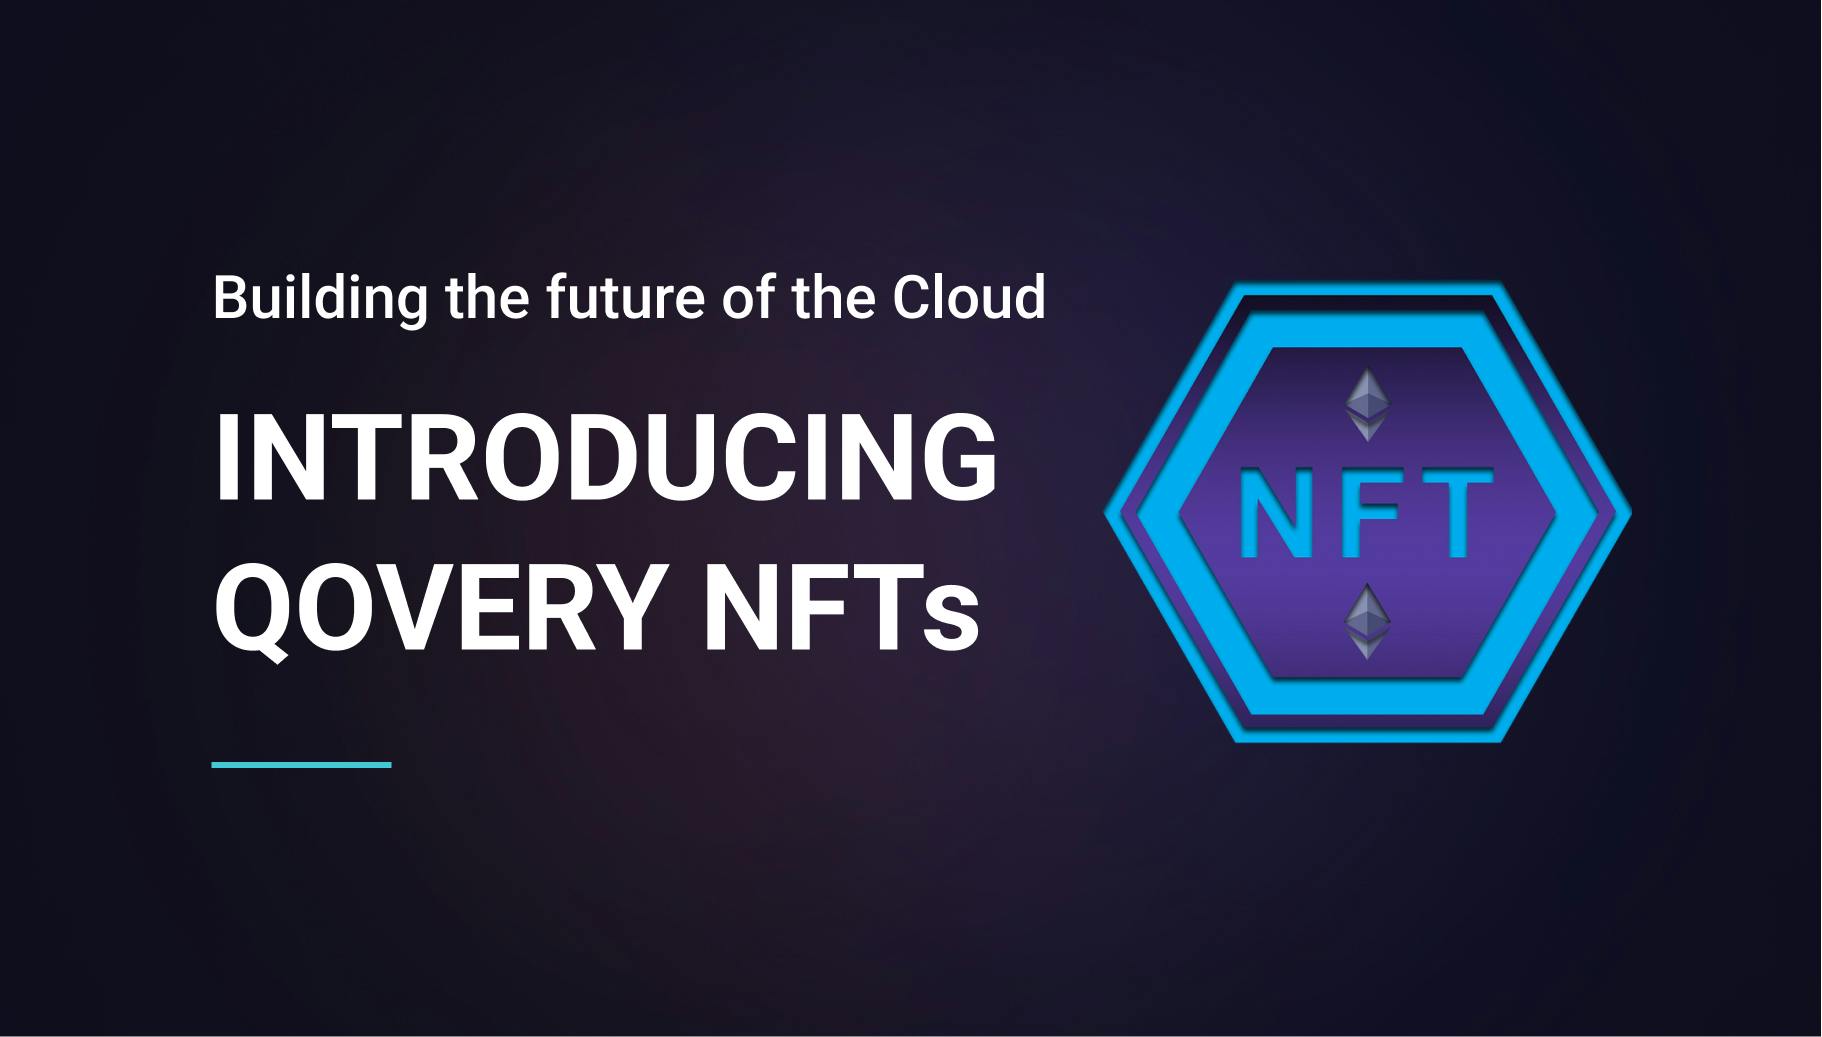 Introducing Qovery NFTs - Qovery